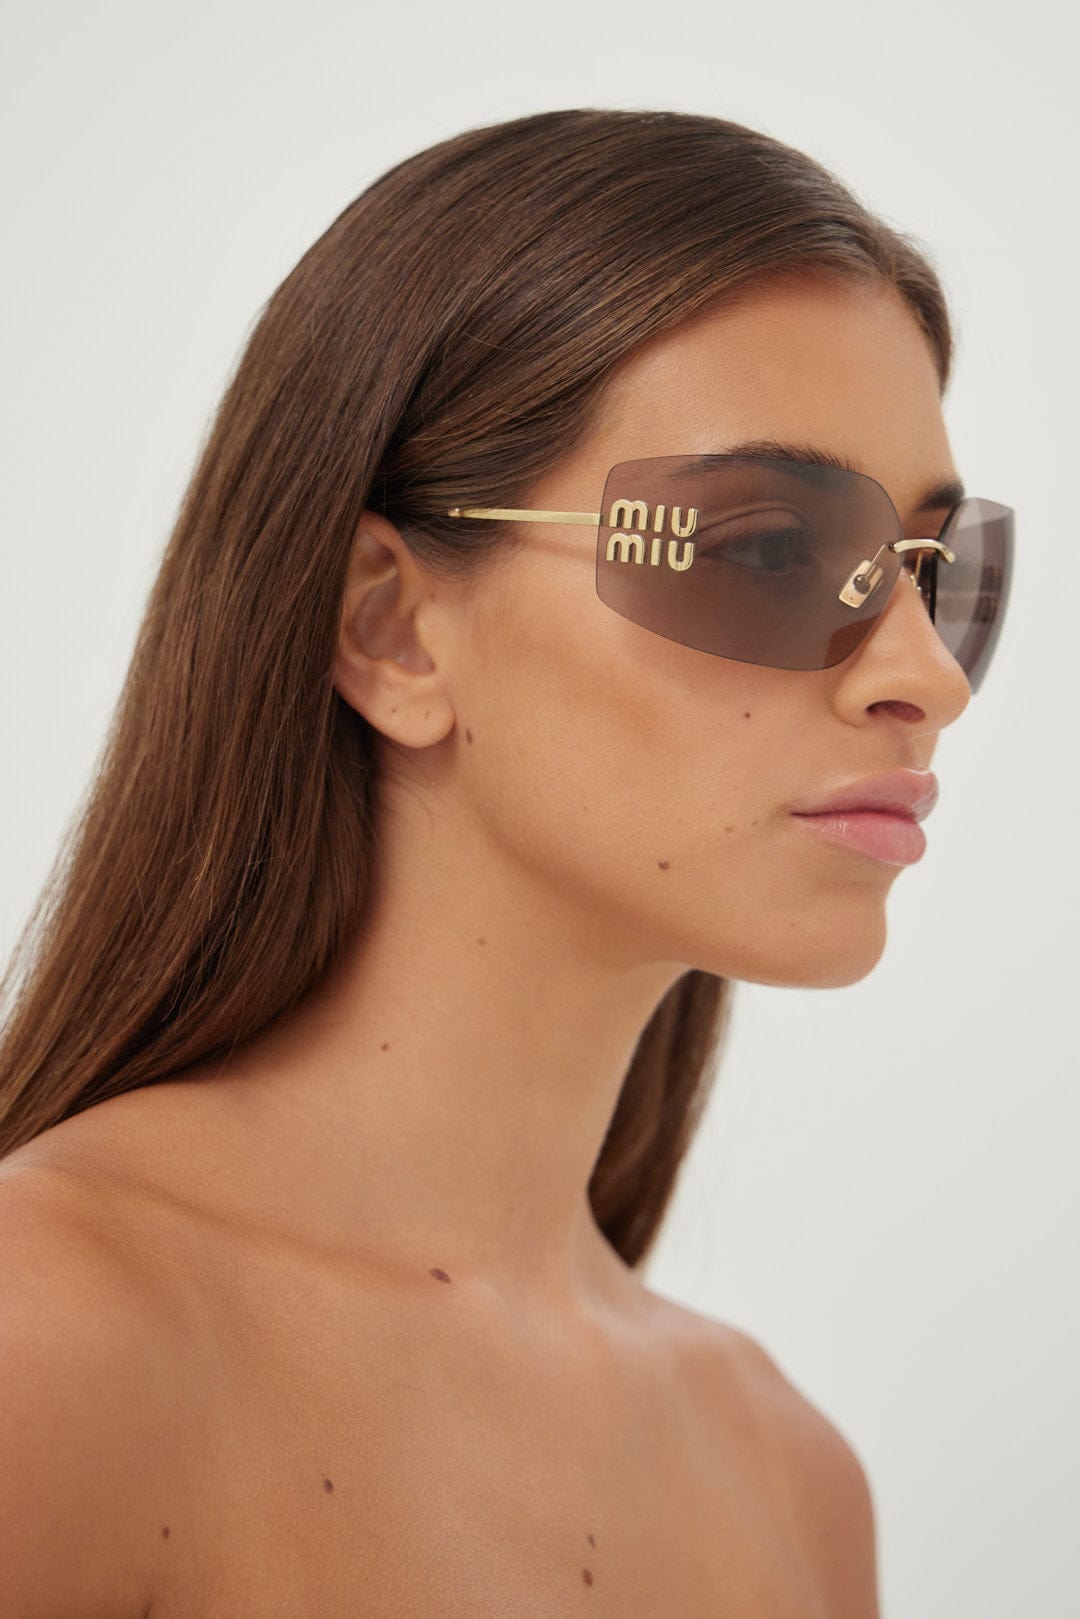 Miu Miu squared metal sunglasses with pink mirror and gold detail - Eyewear Club